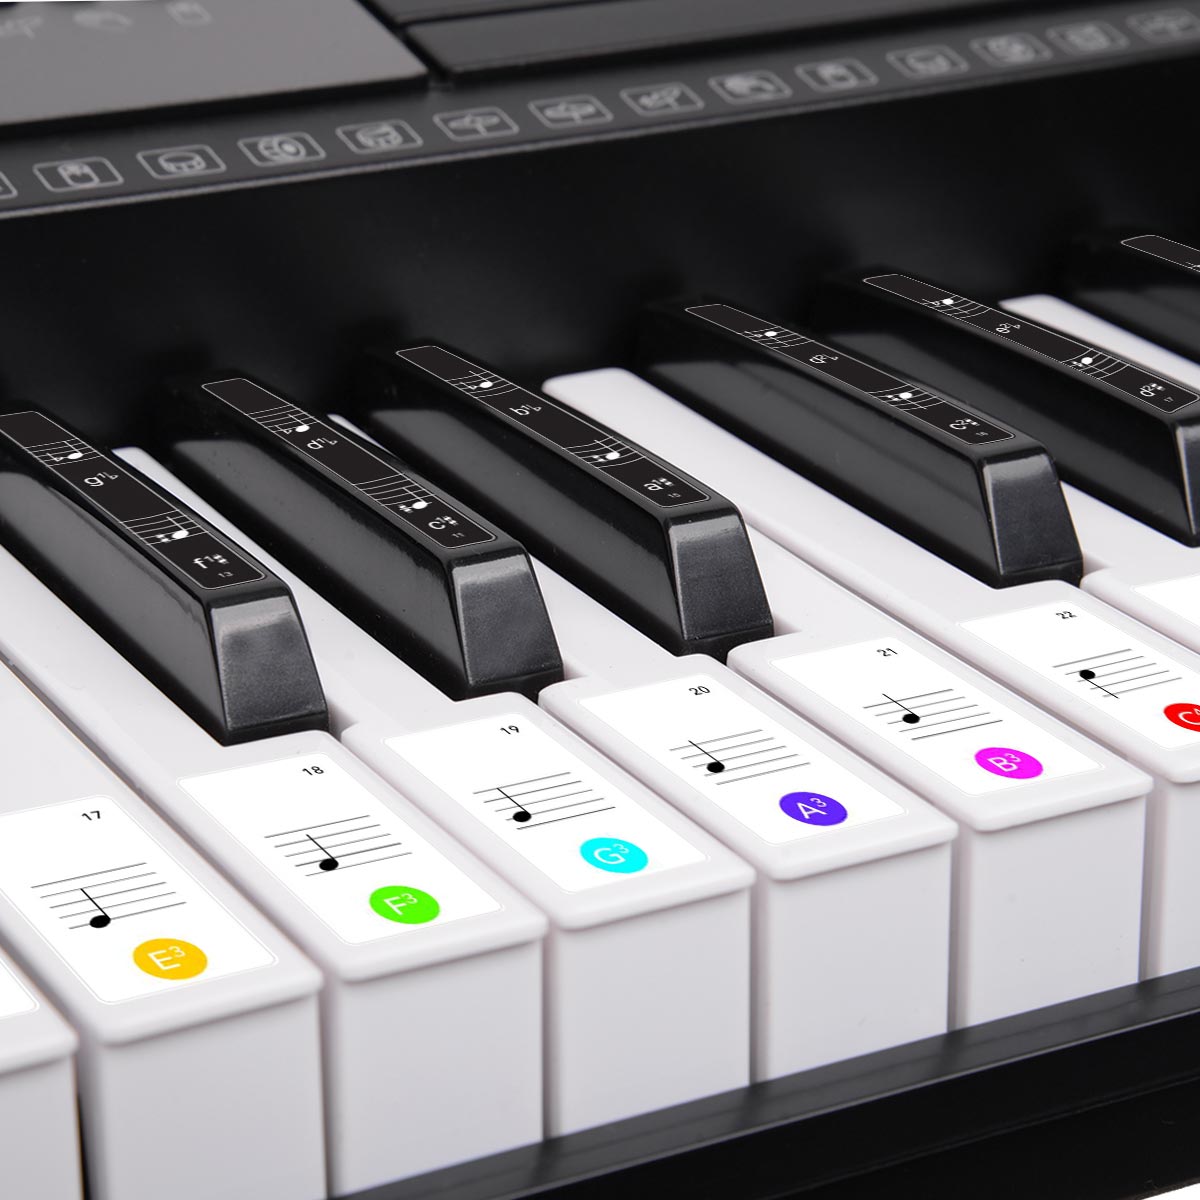 61-Key Electronic Keyboard Piano, 255 Rhythms, Stand, Black